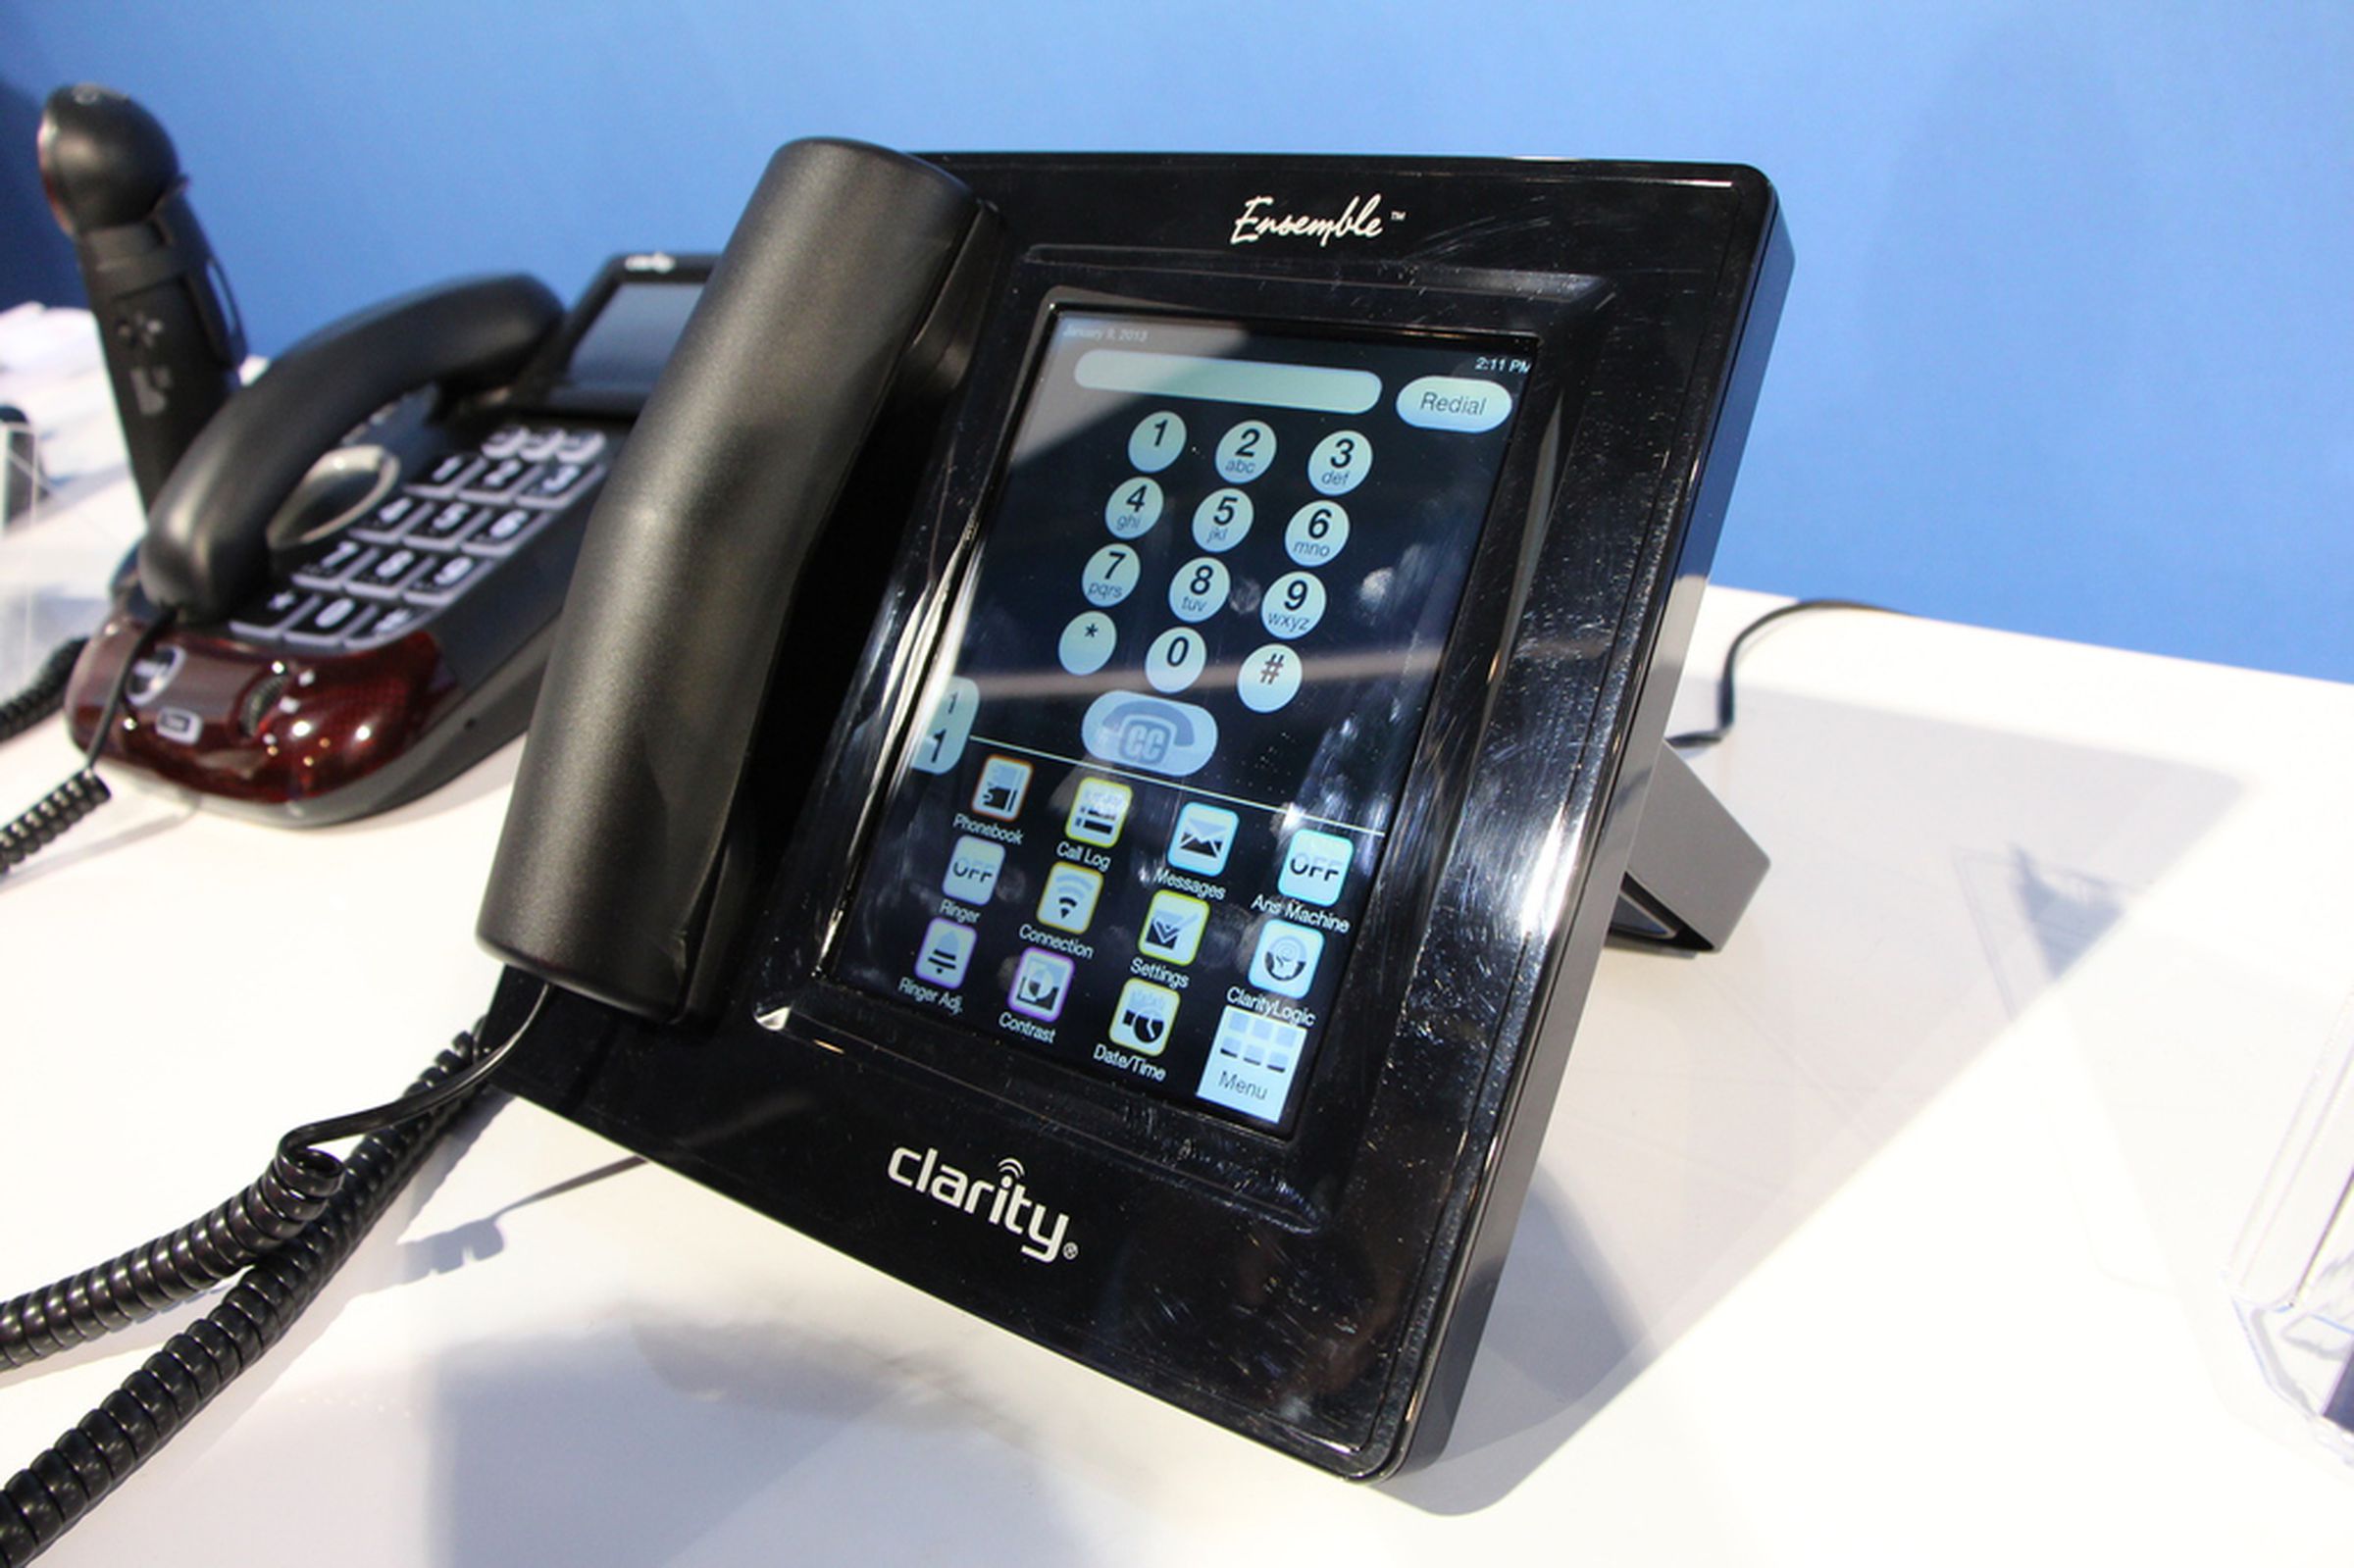 Clarity Ensemble phone hands-on photos